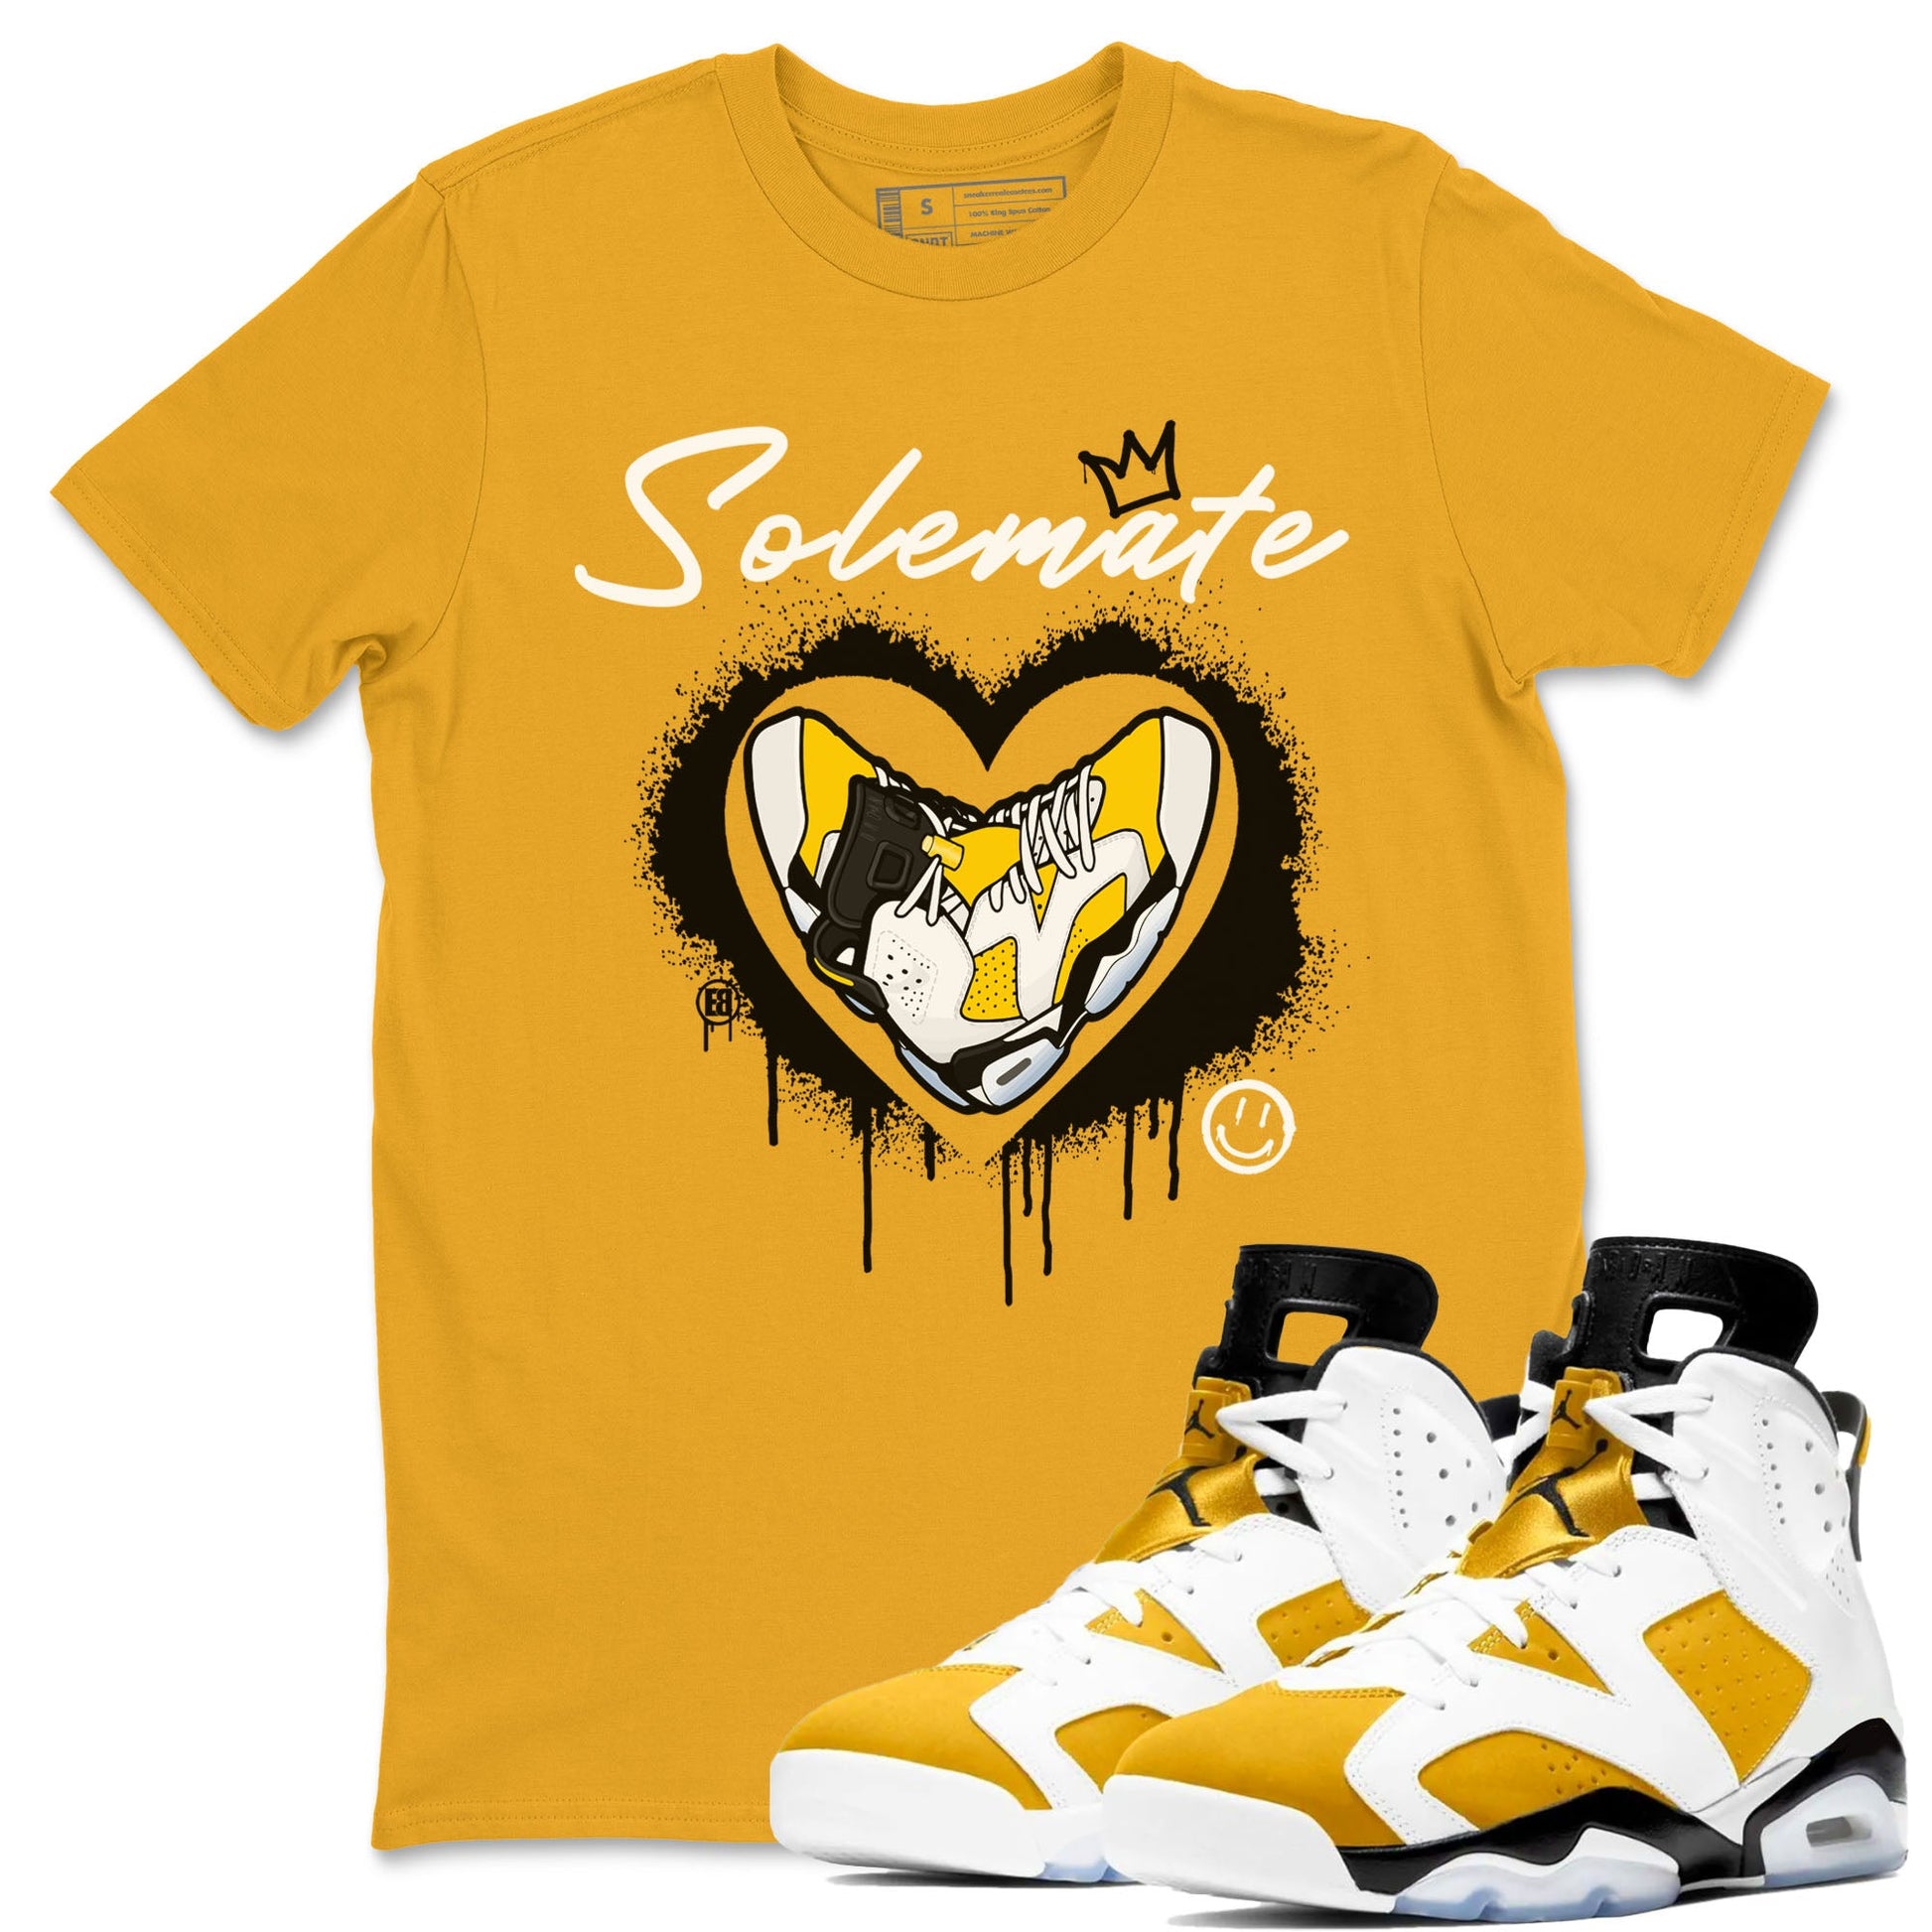 Solemate sneaker match tees to 6s Yellow Ochre street fashion brand for shirts to match Jordans SNRT Sneaker Tees Air Jordan 6 Yellow Ochre unisex t-shirt Gold 1 unisex shirt